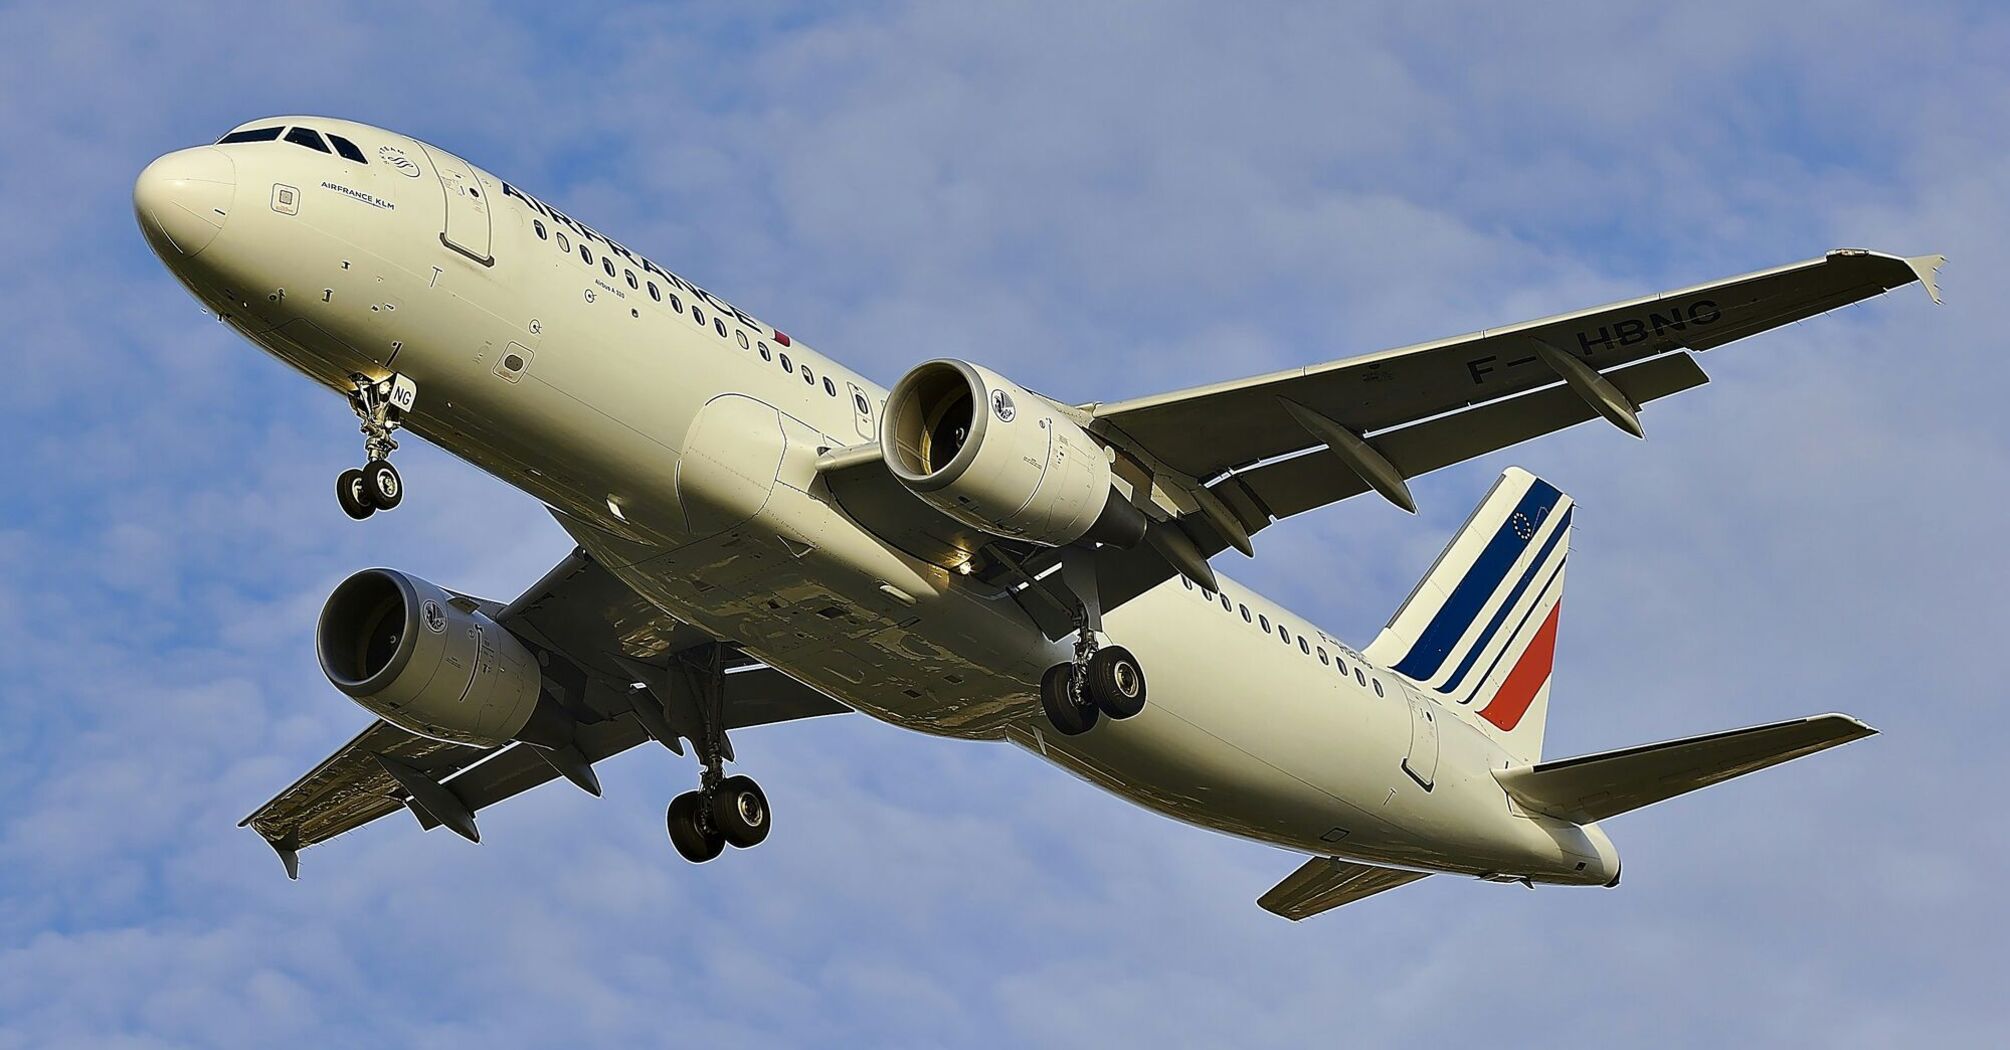 White Air France airliner